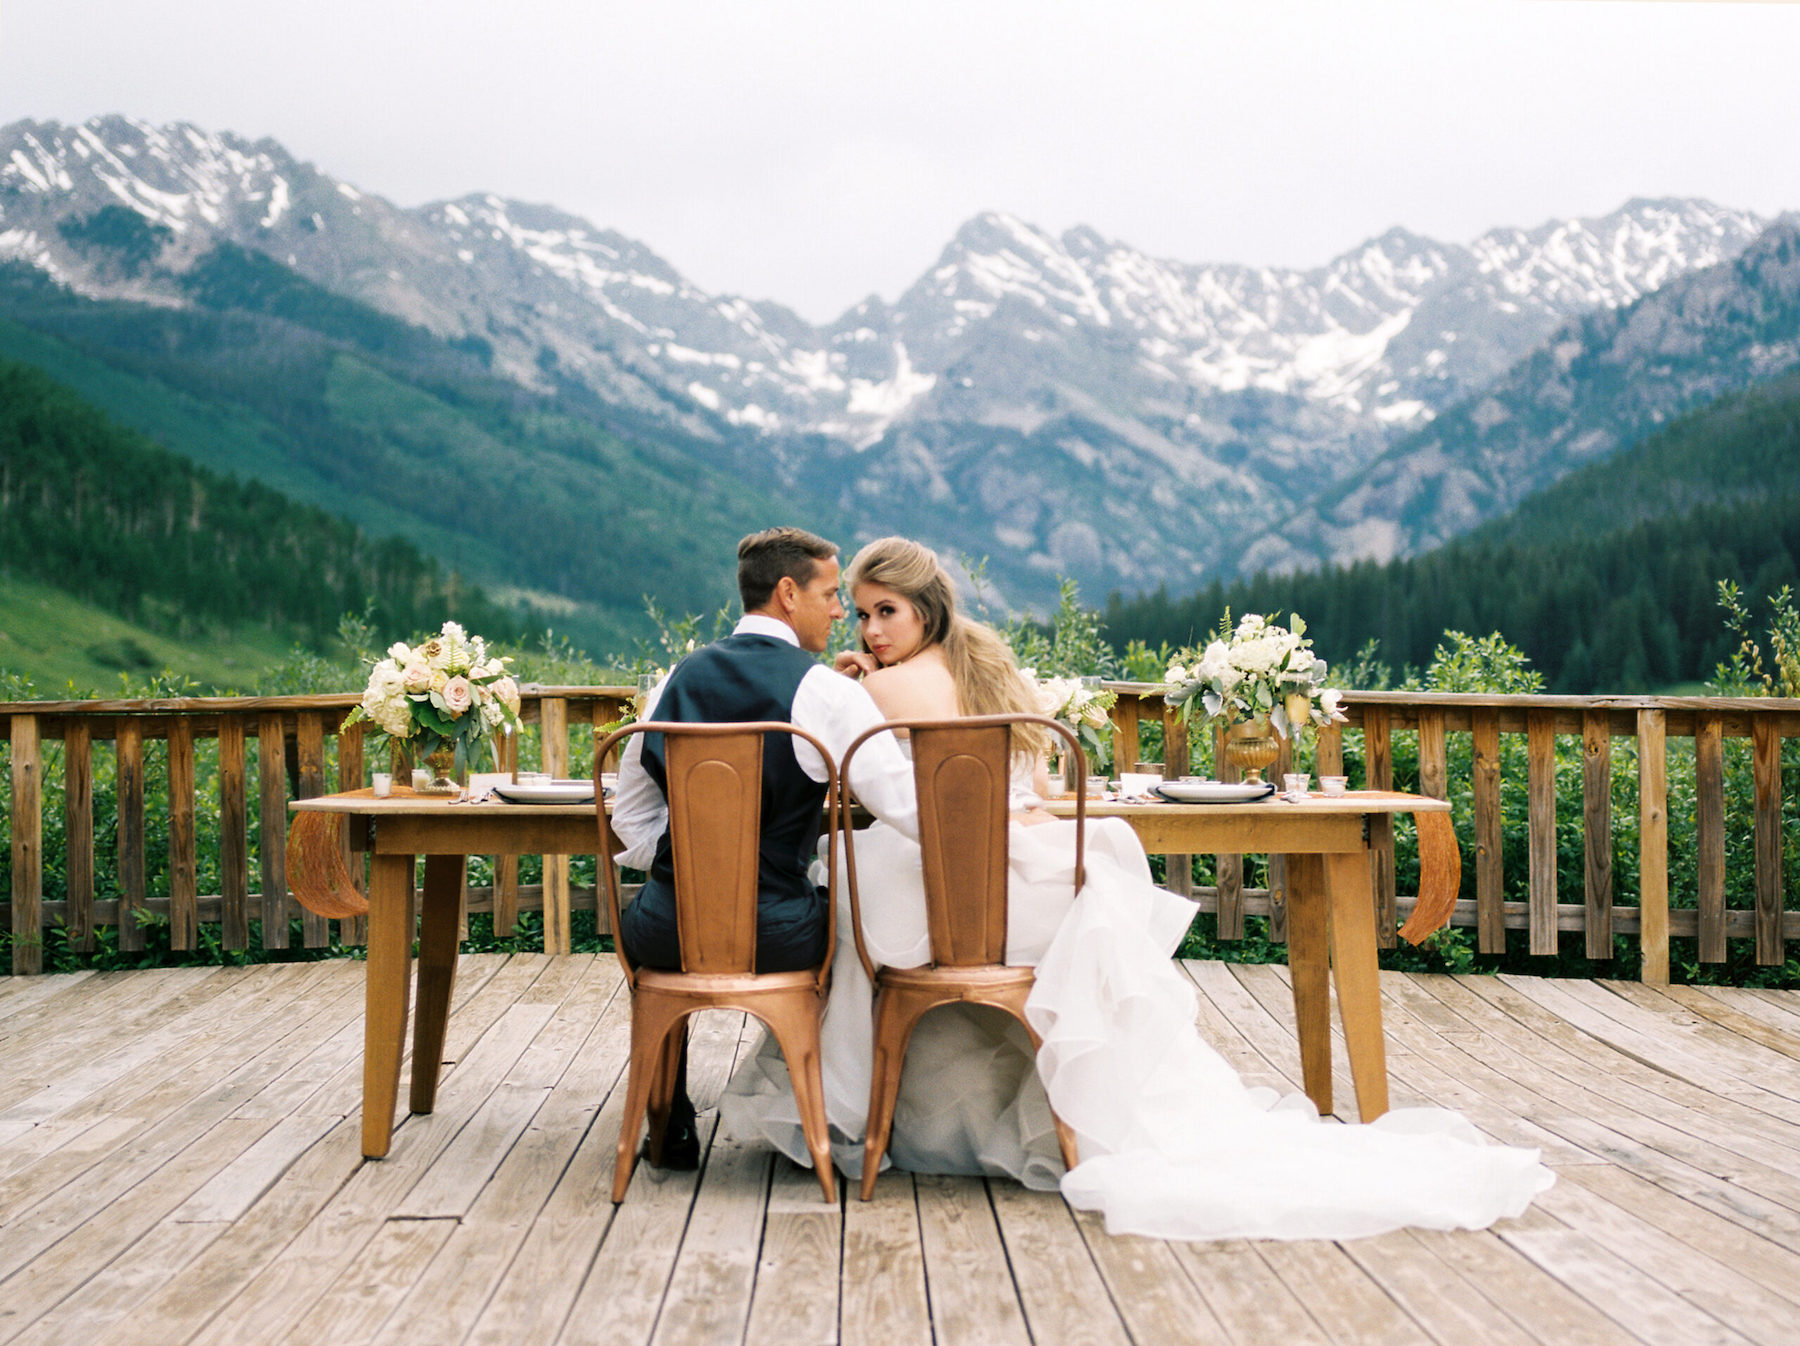 Piney River Ranch wedding with Colorado Rockies view